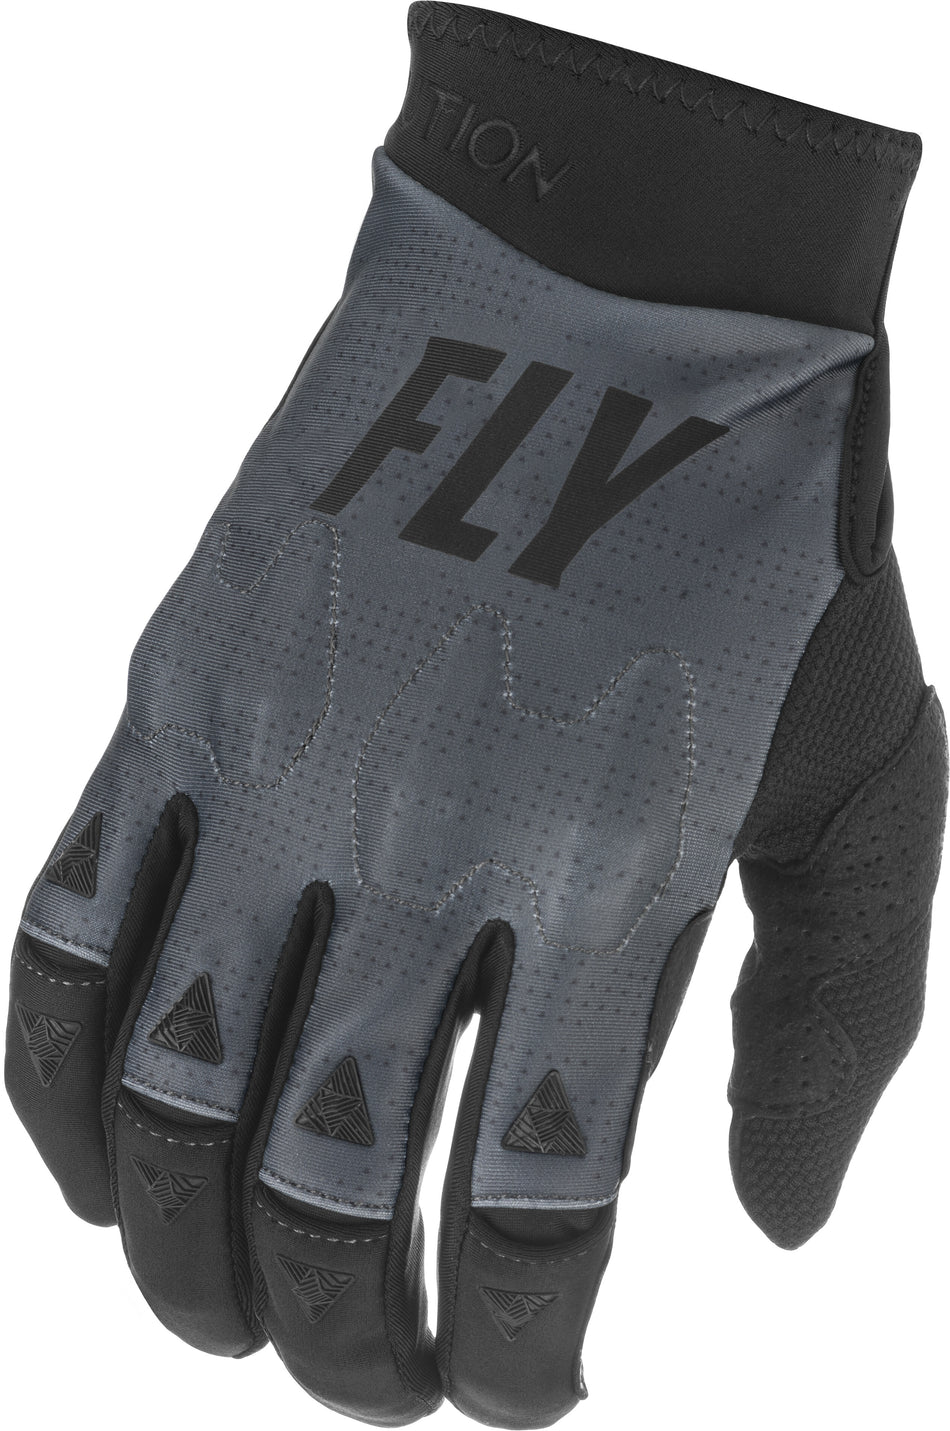 FLY RACING Evolution Dst Gloves Grey/Black/Stone Sz 09 374-11609